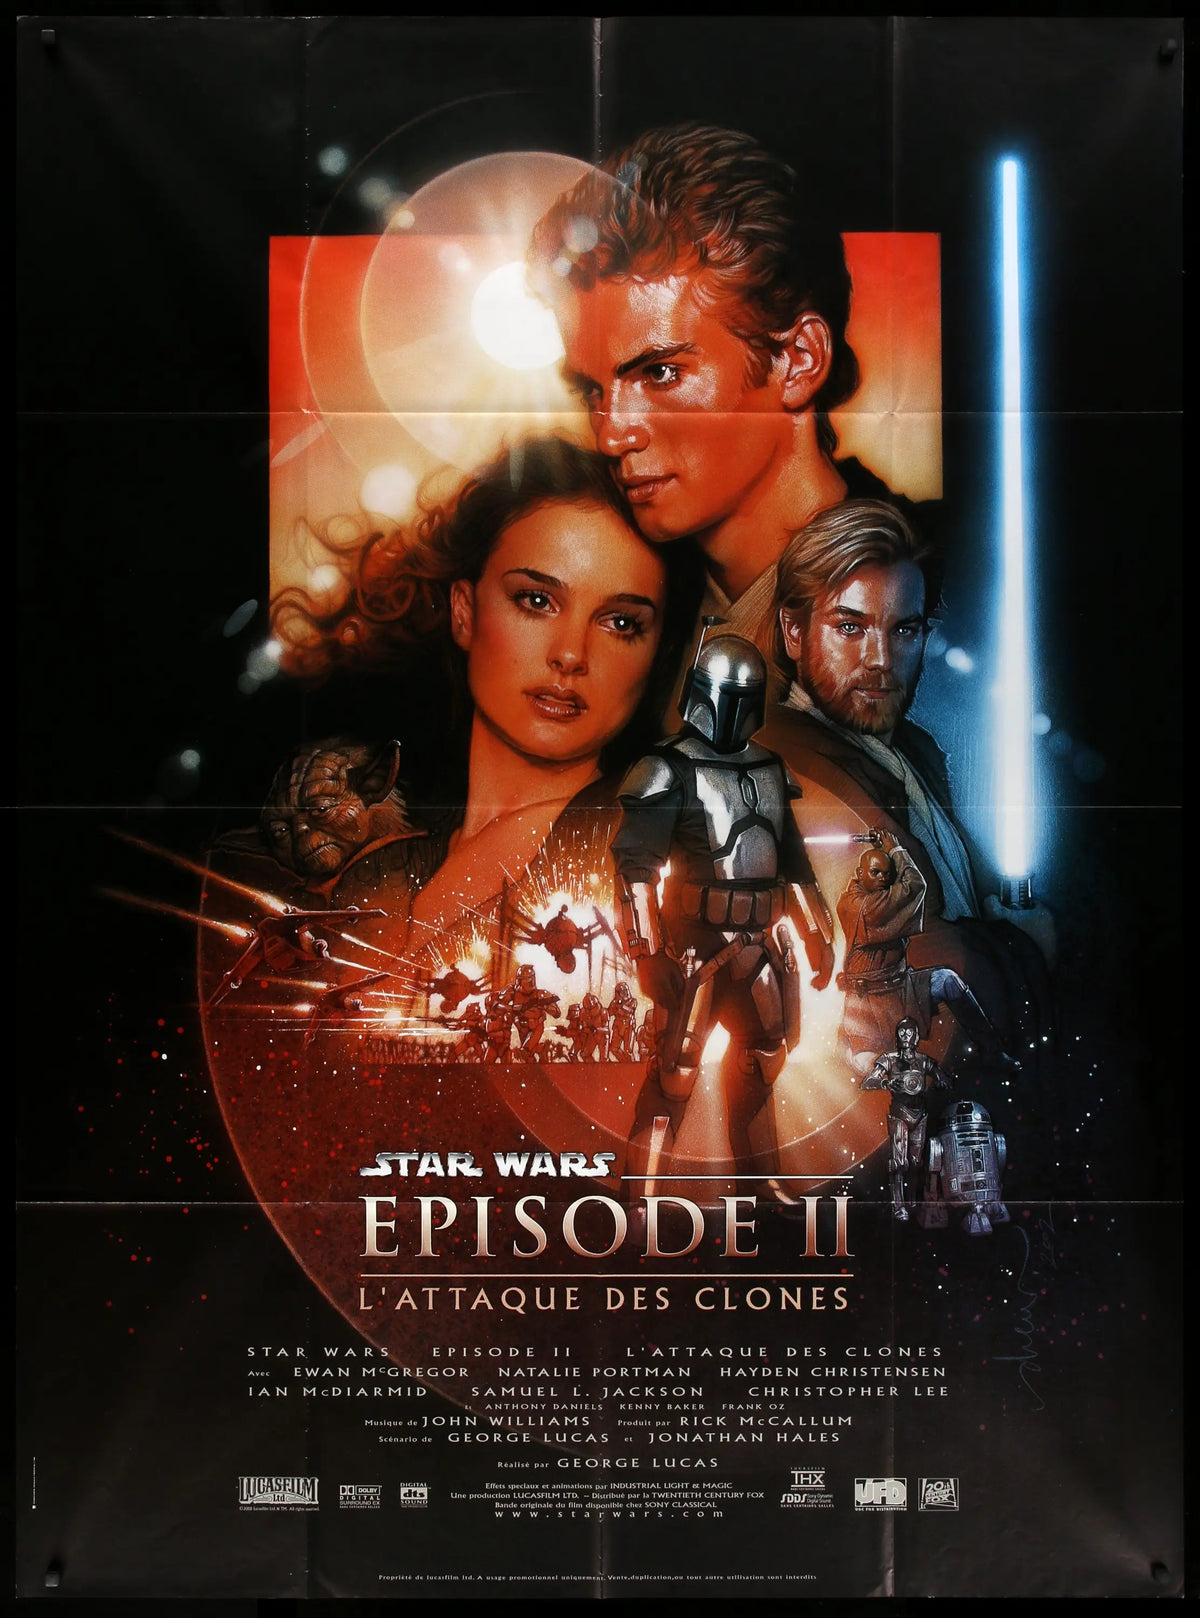 Star Wars: Episode II - Attack of the Clones (2002) original movie poster for sale at Original Film Art